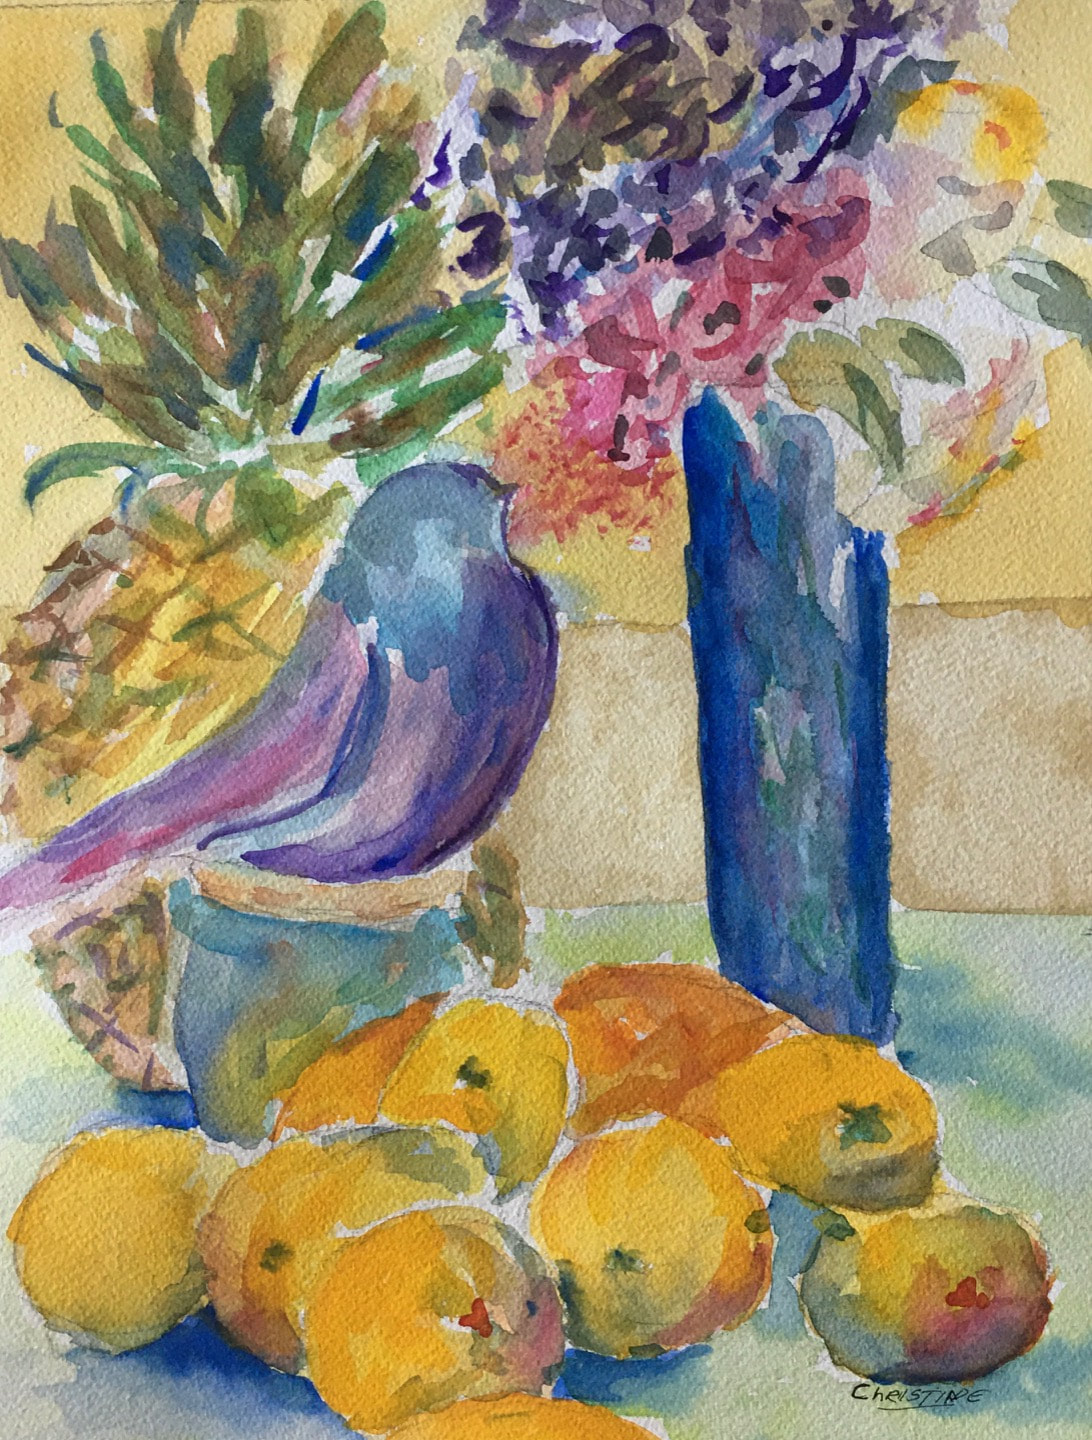 Artist: Christine Bozar - Artwork: Artwork: Bird With Fruit And Flowers